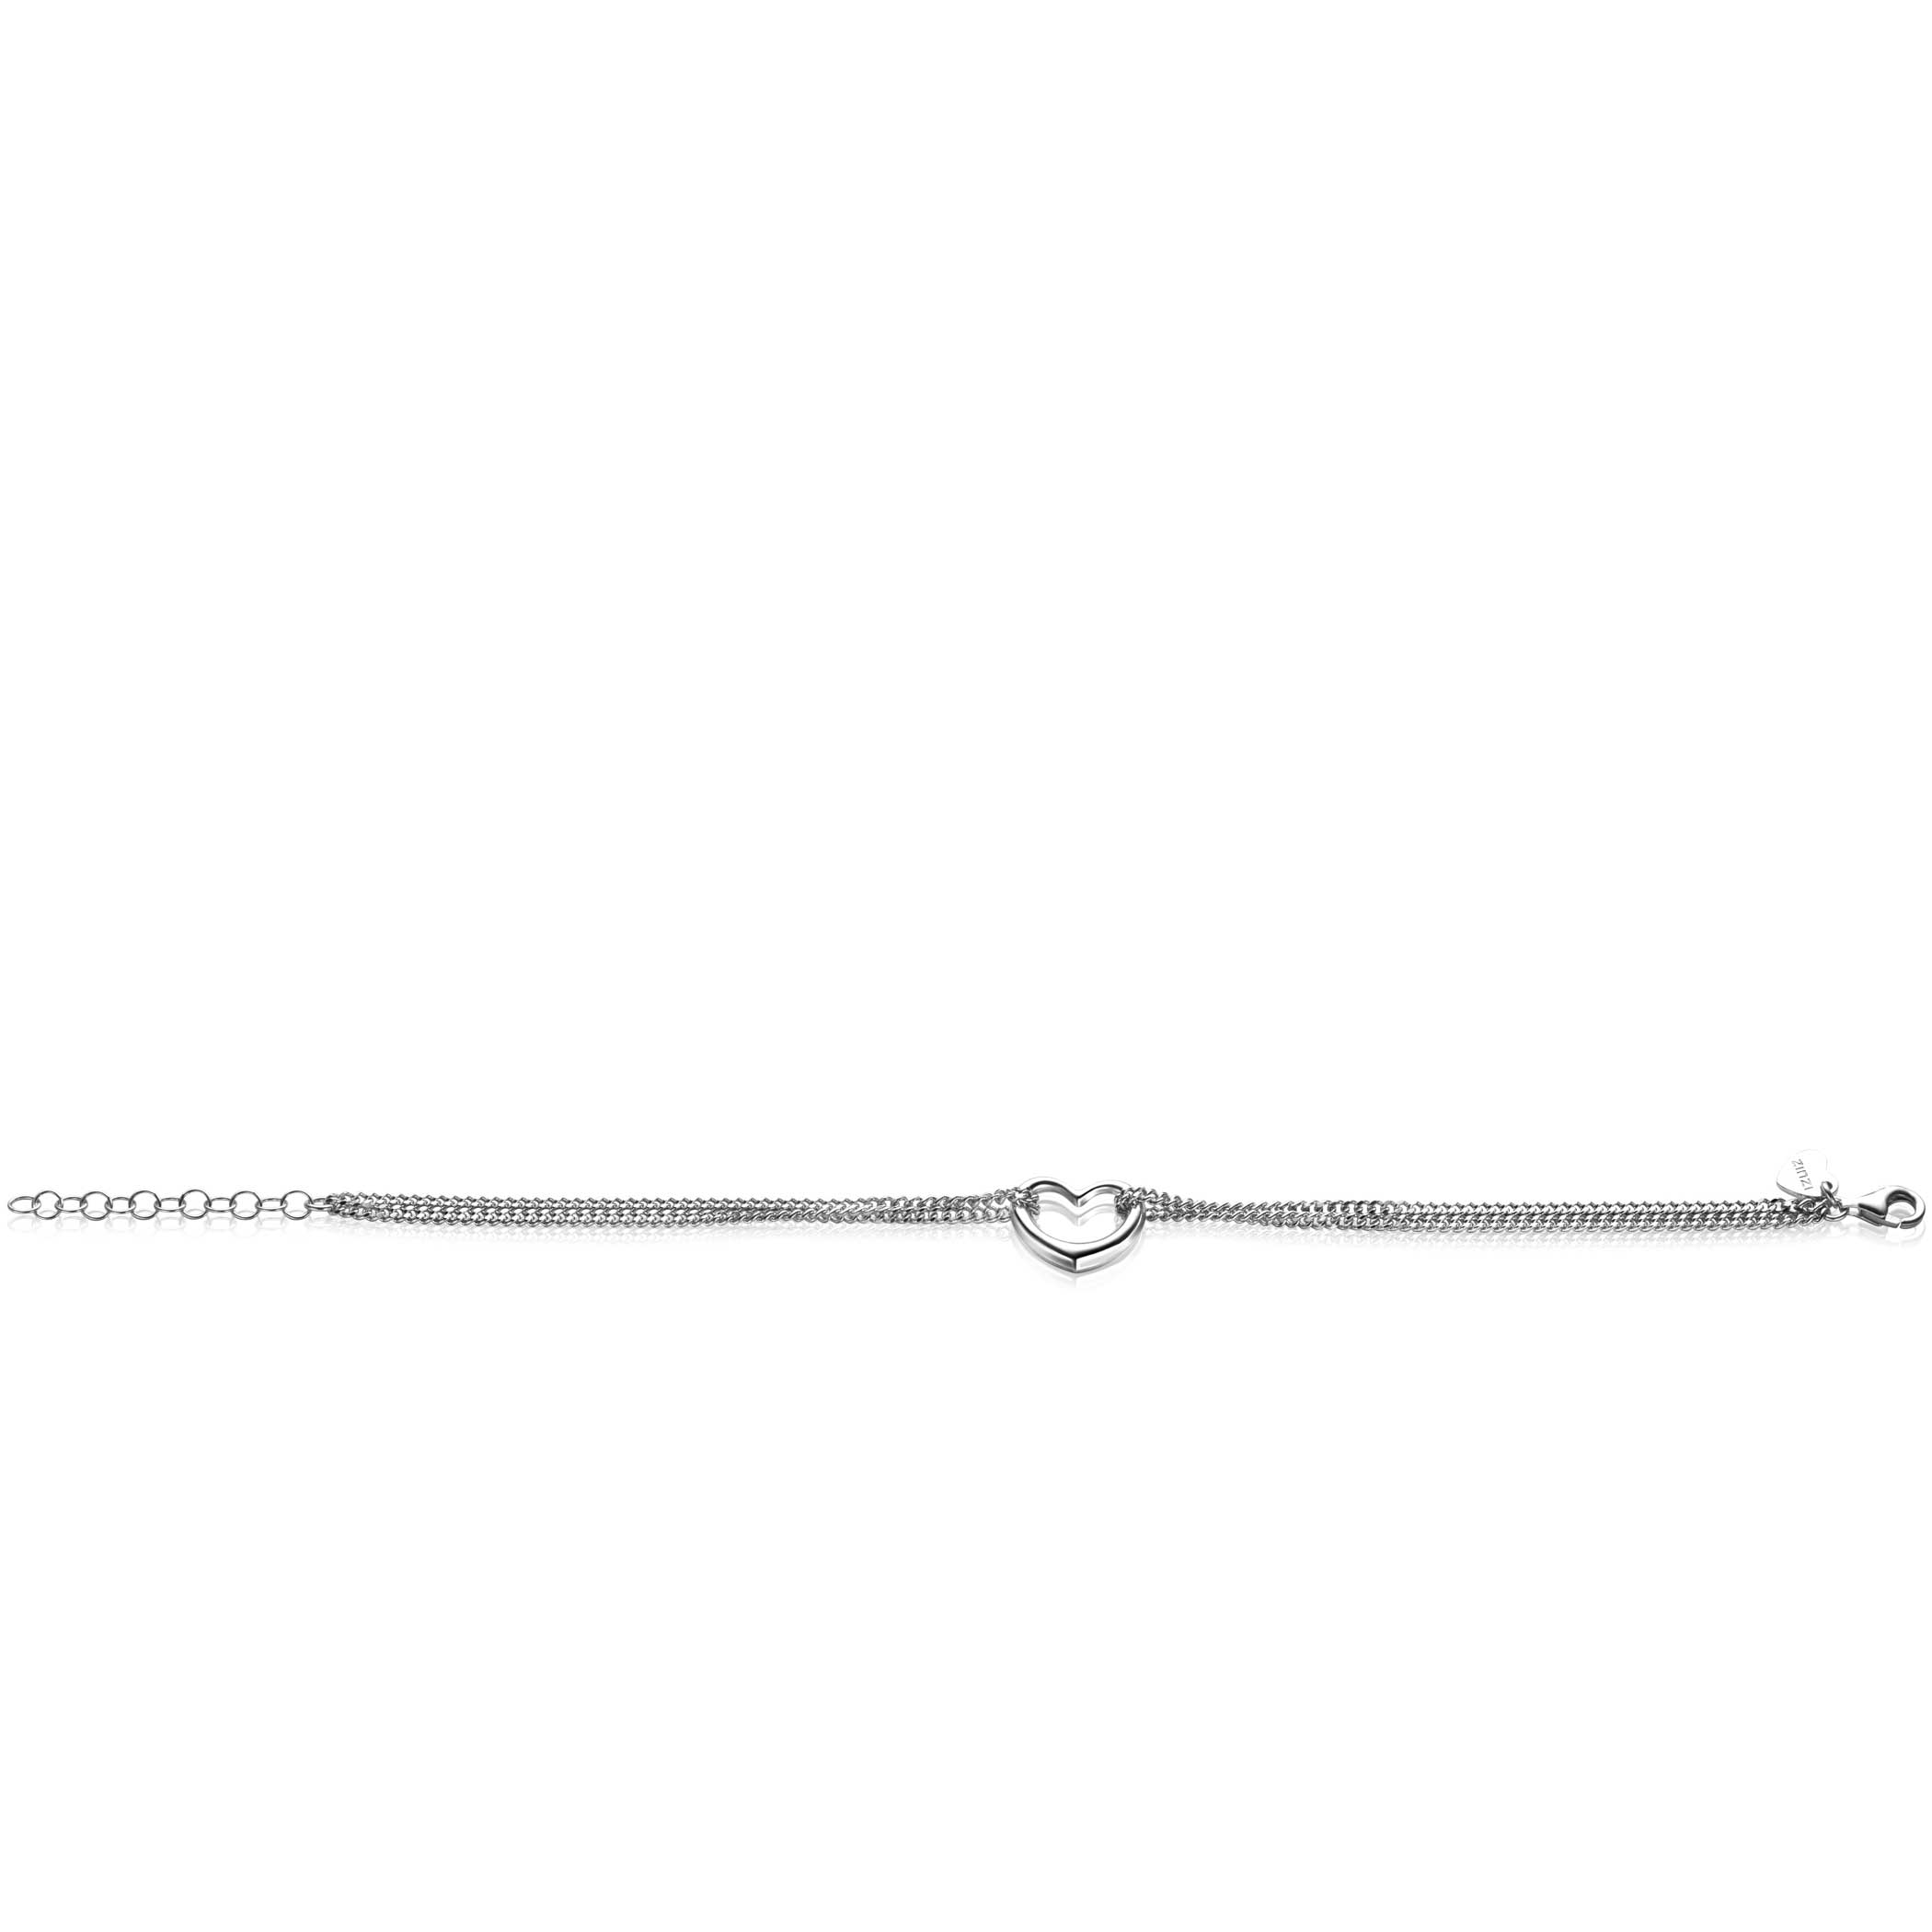 ZINZI Sterling Silver Multi-look Bracelet Curb Chain and Open Heart 16,5-19,5cm ZIA2516